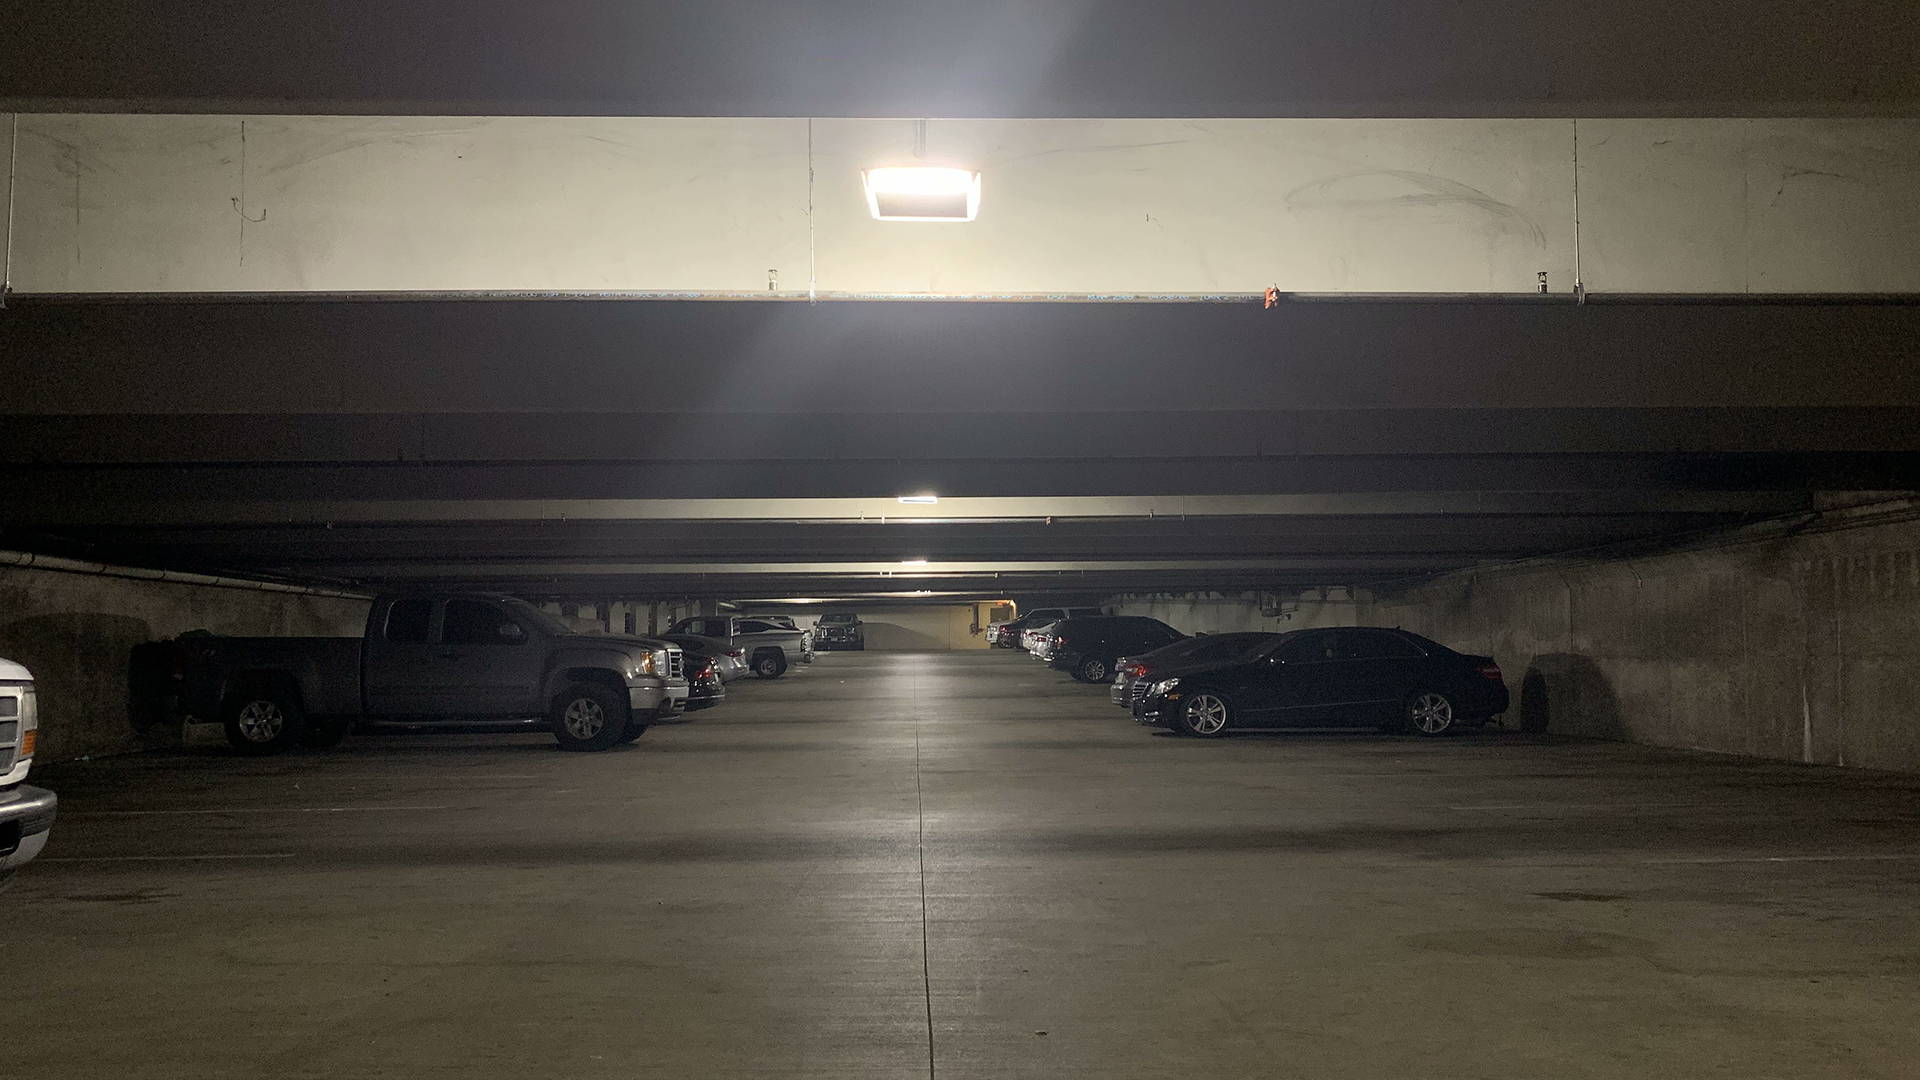 LED canopy lights installed in an indoor parking garage